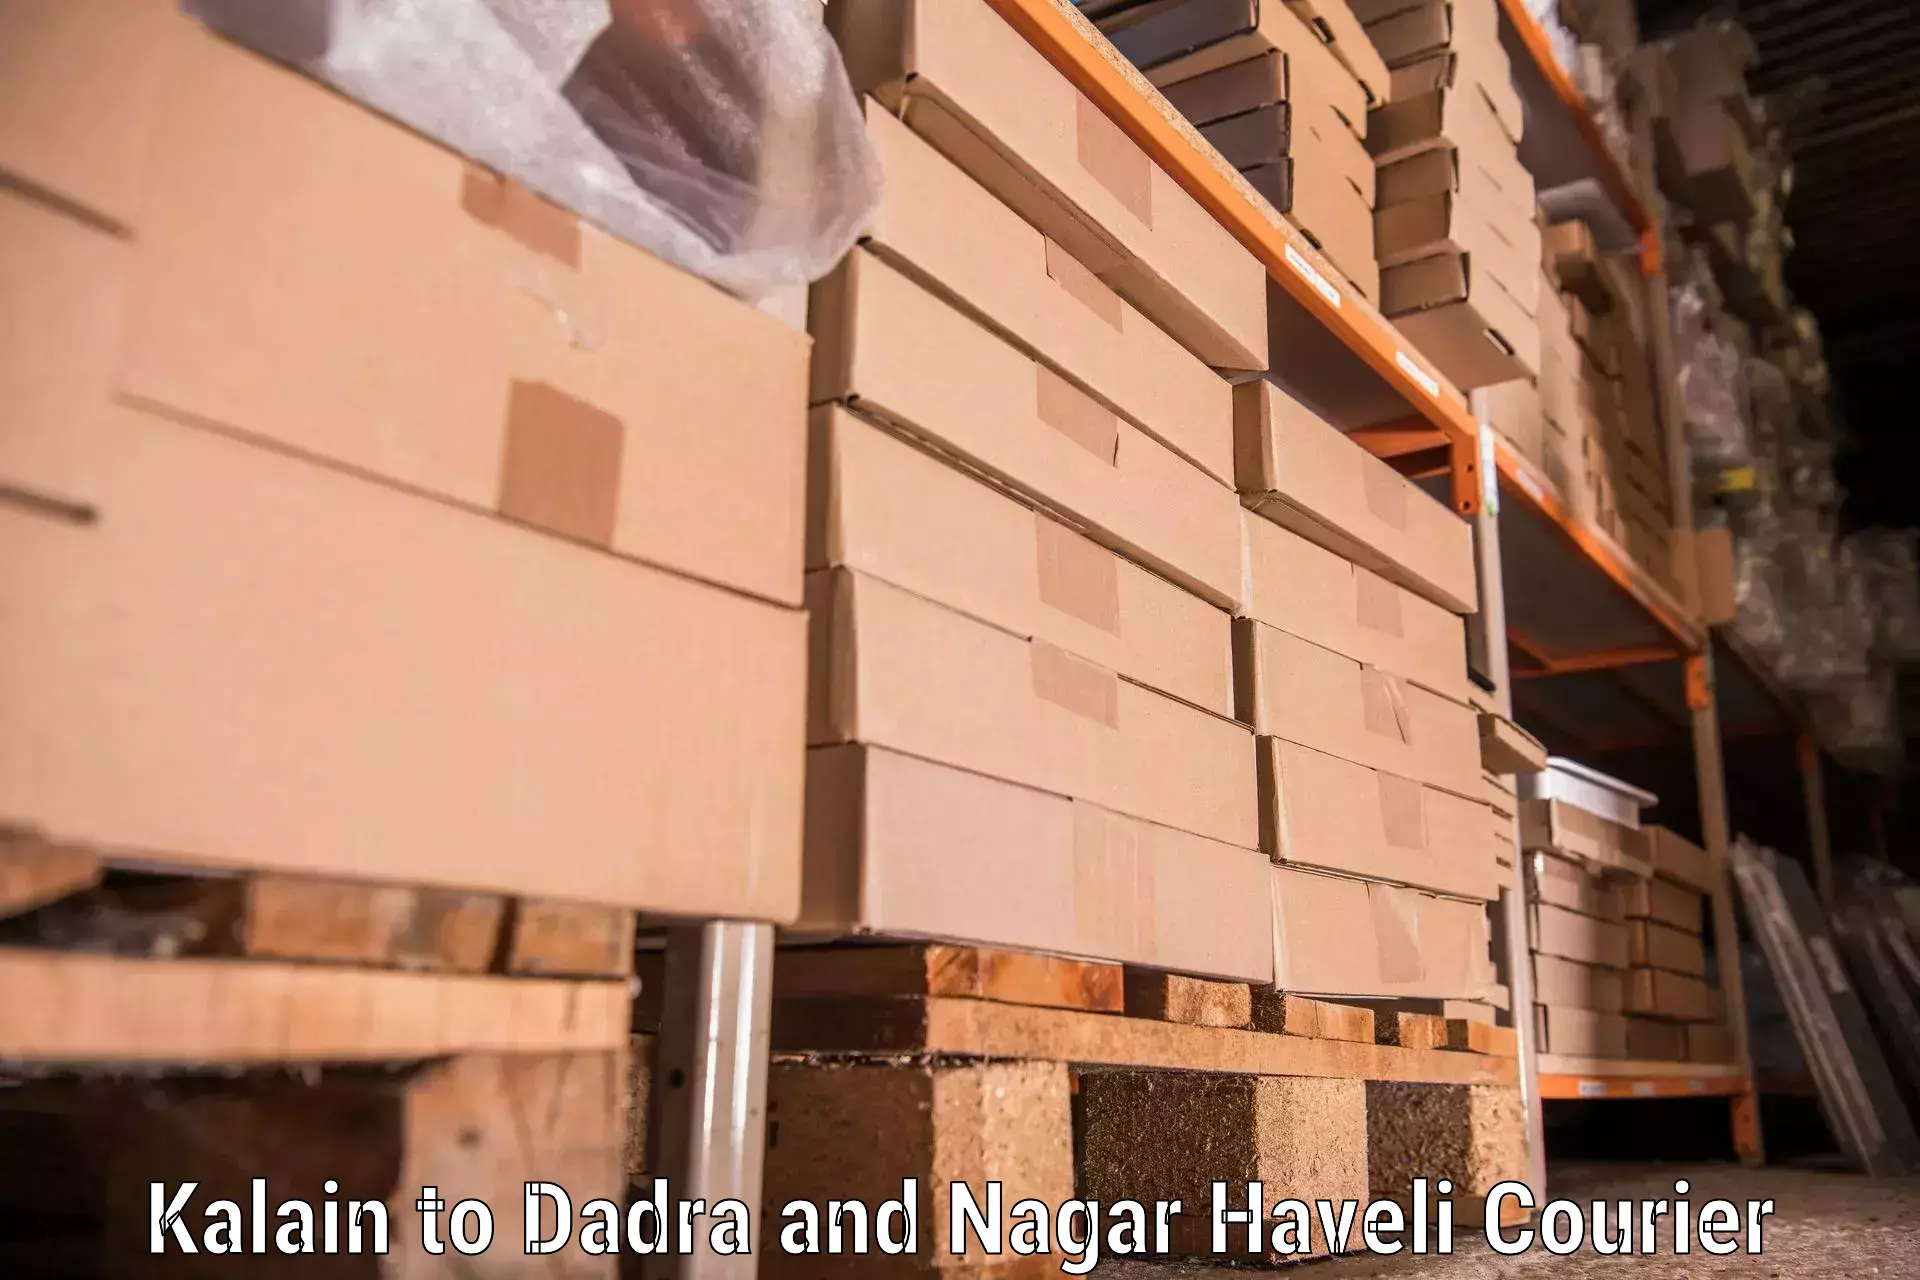 Furniture moving experts Kalain to Dadra and Nagar Haveli